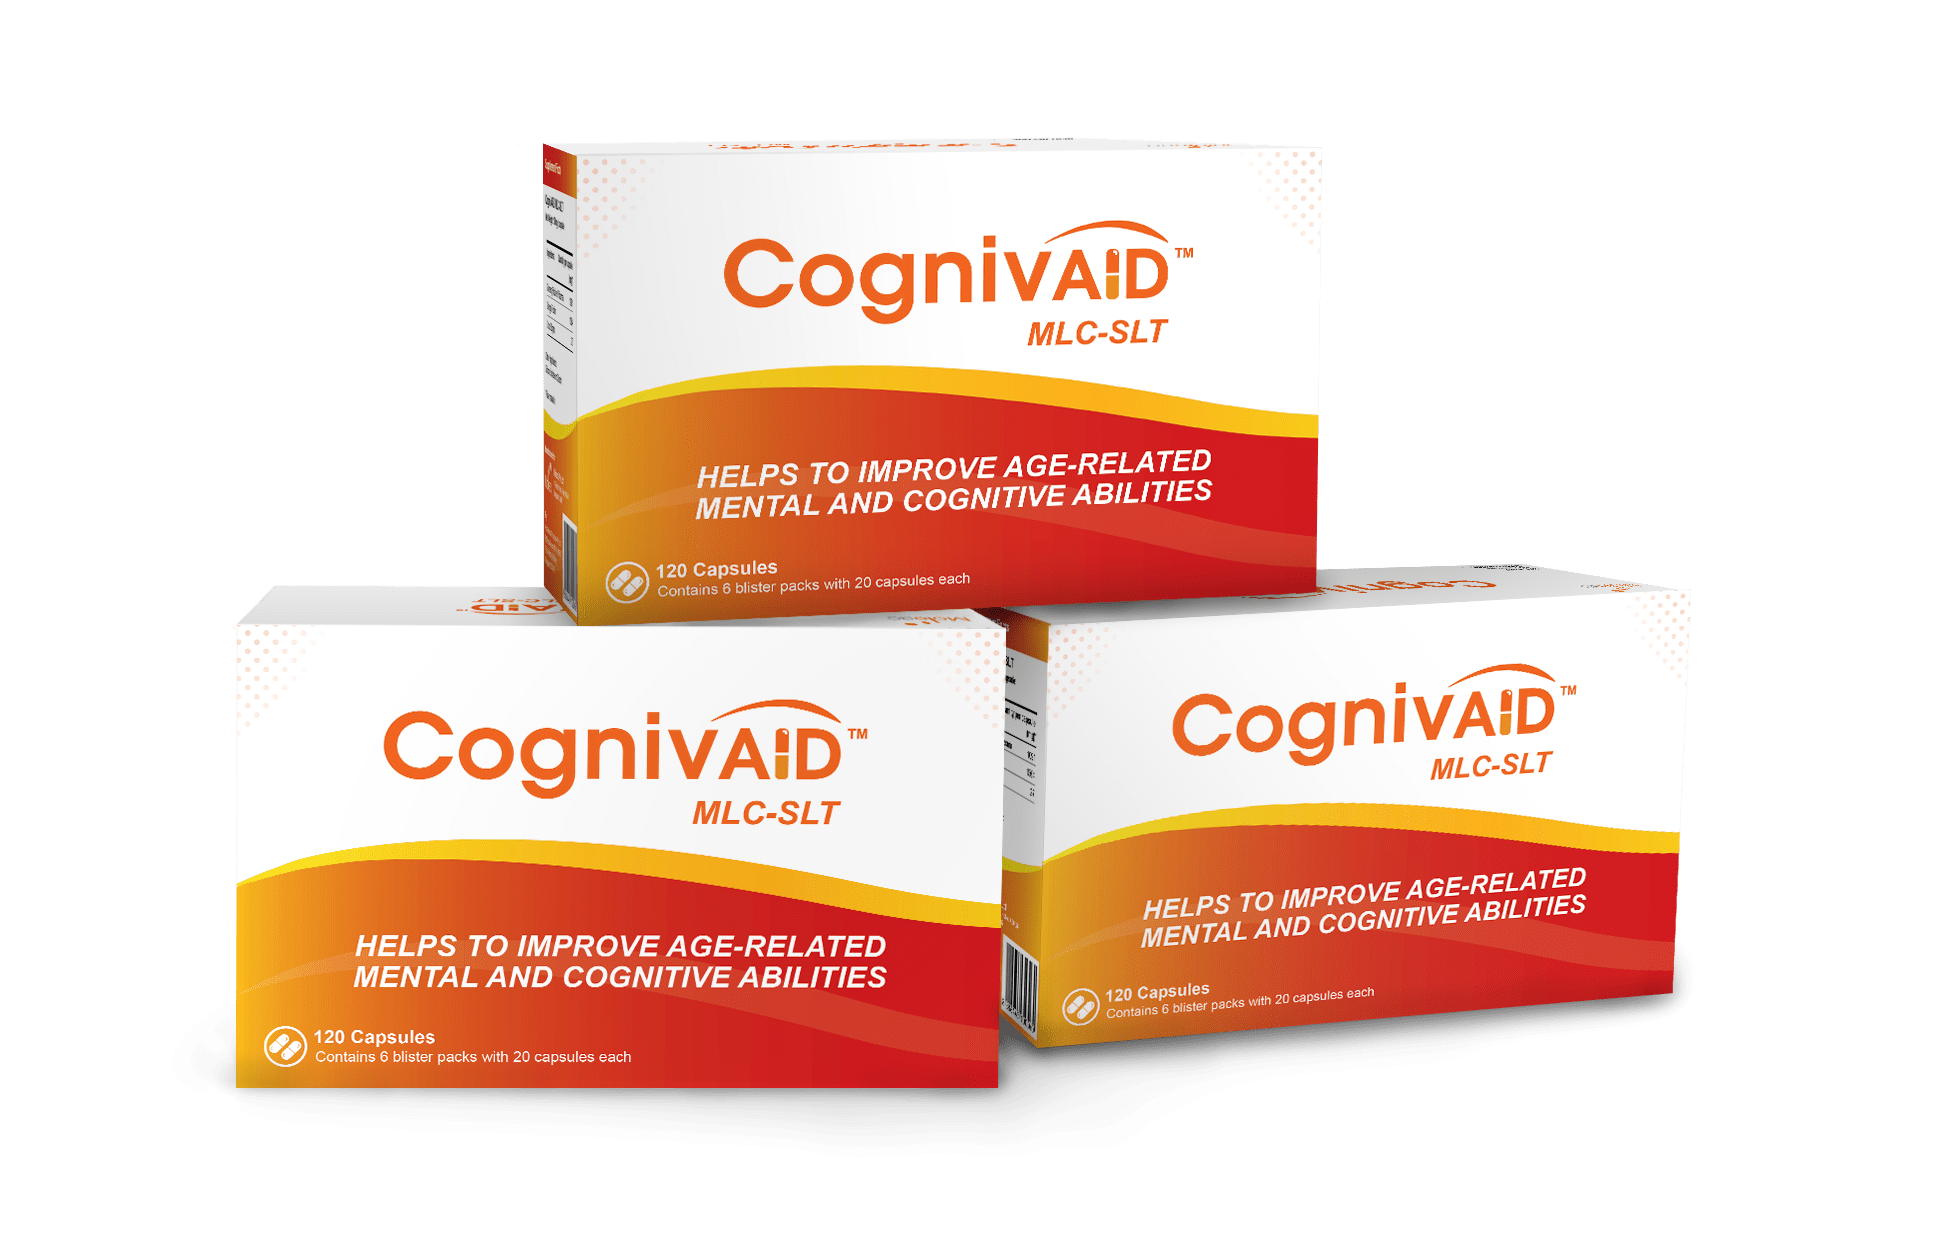 CognivAiD contains Croci Stigma, Ginkgo Folium and Ginseng Radix et Rhizoma